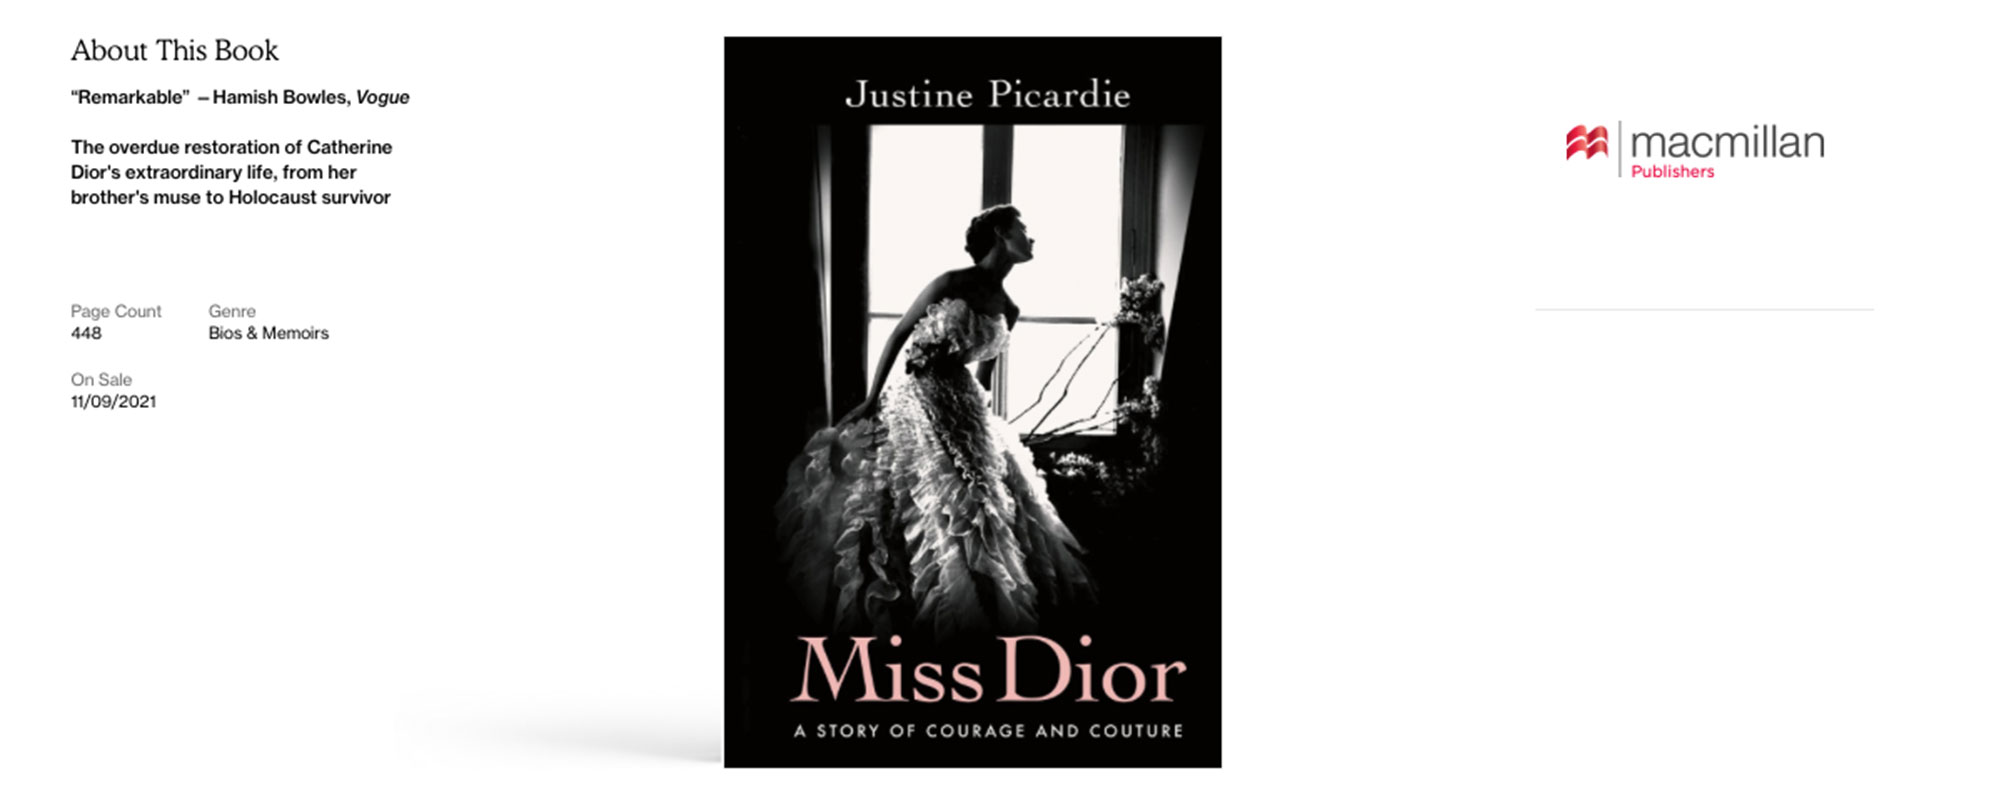 macmillan page for Miss Dior by Justine Picardie